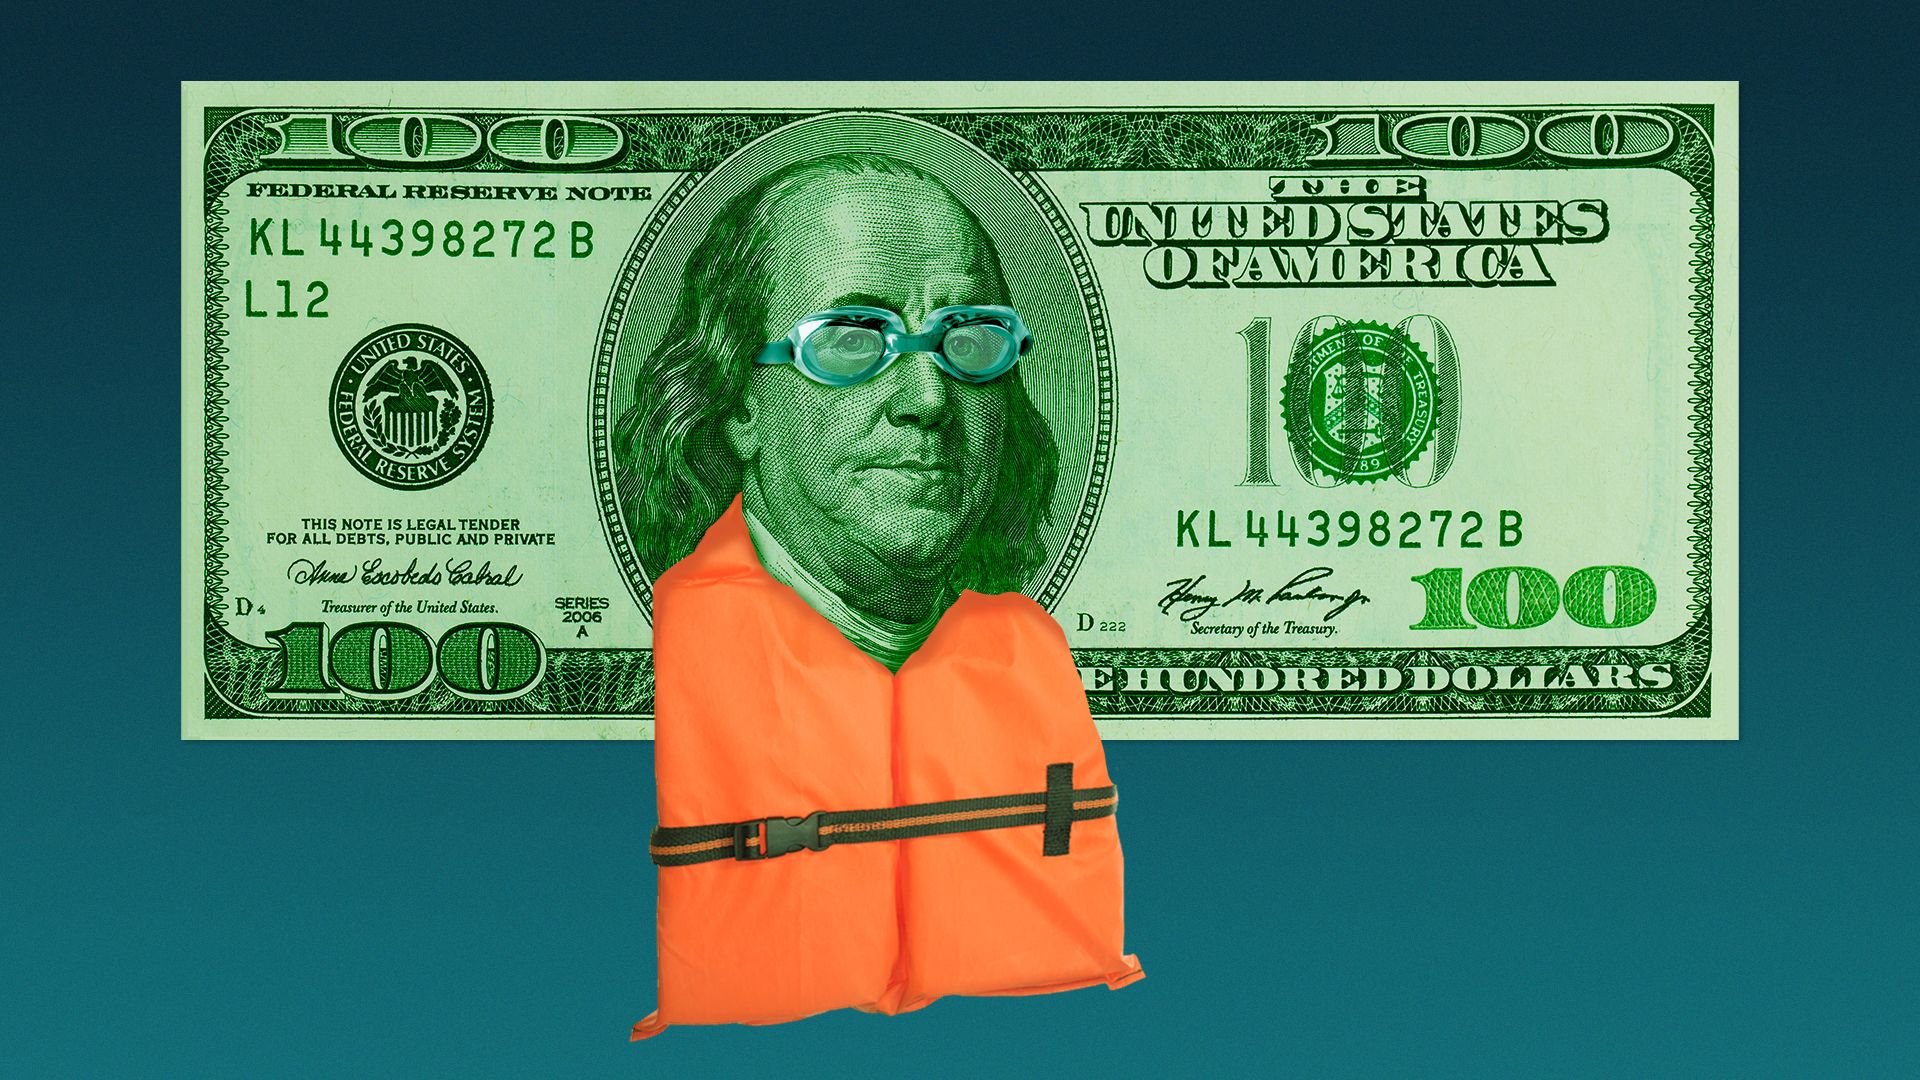 An illustration of Ben Franklin on the hundred dollar bill wearing a lifejacket.